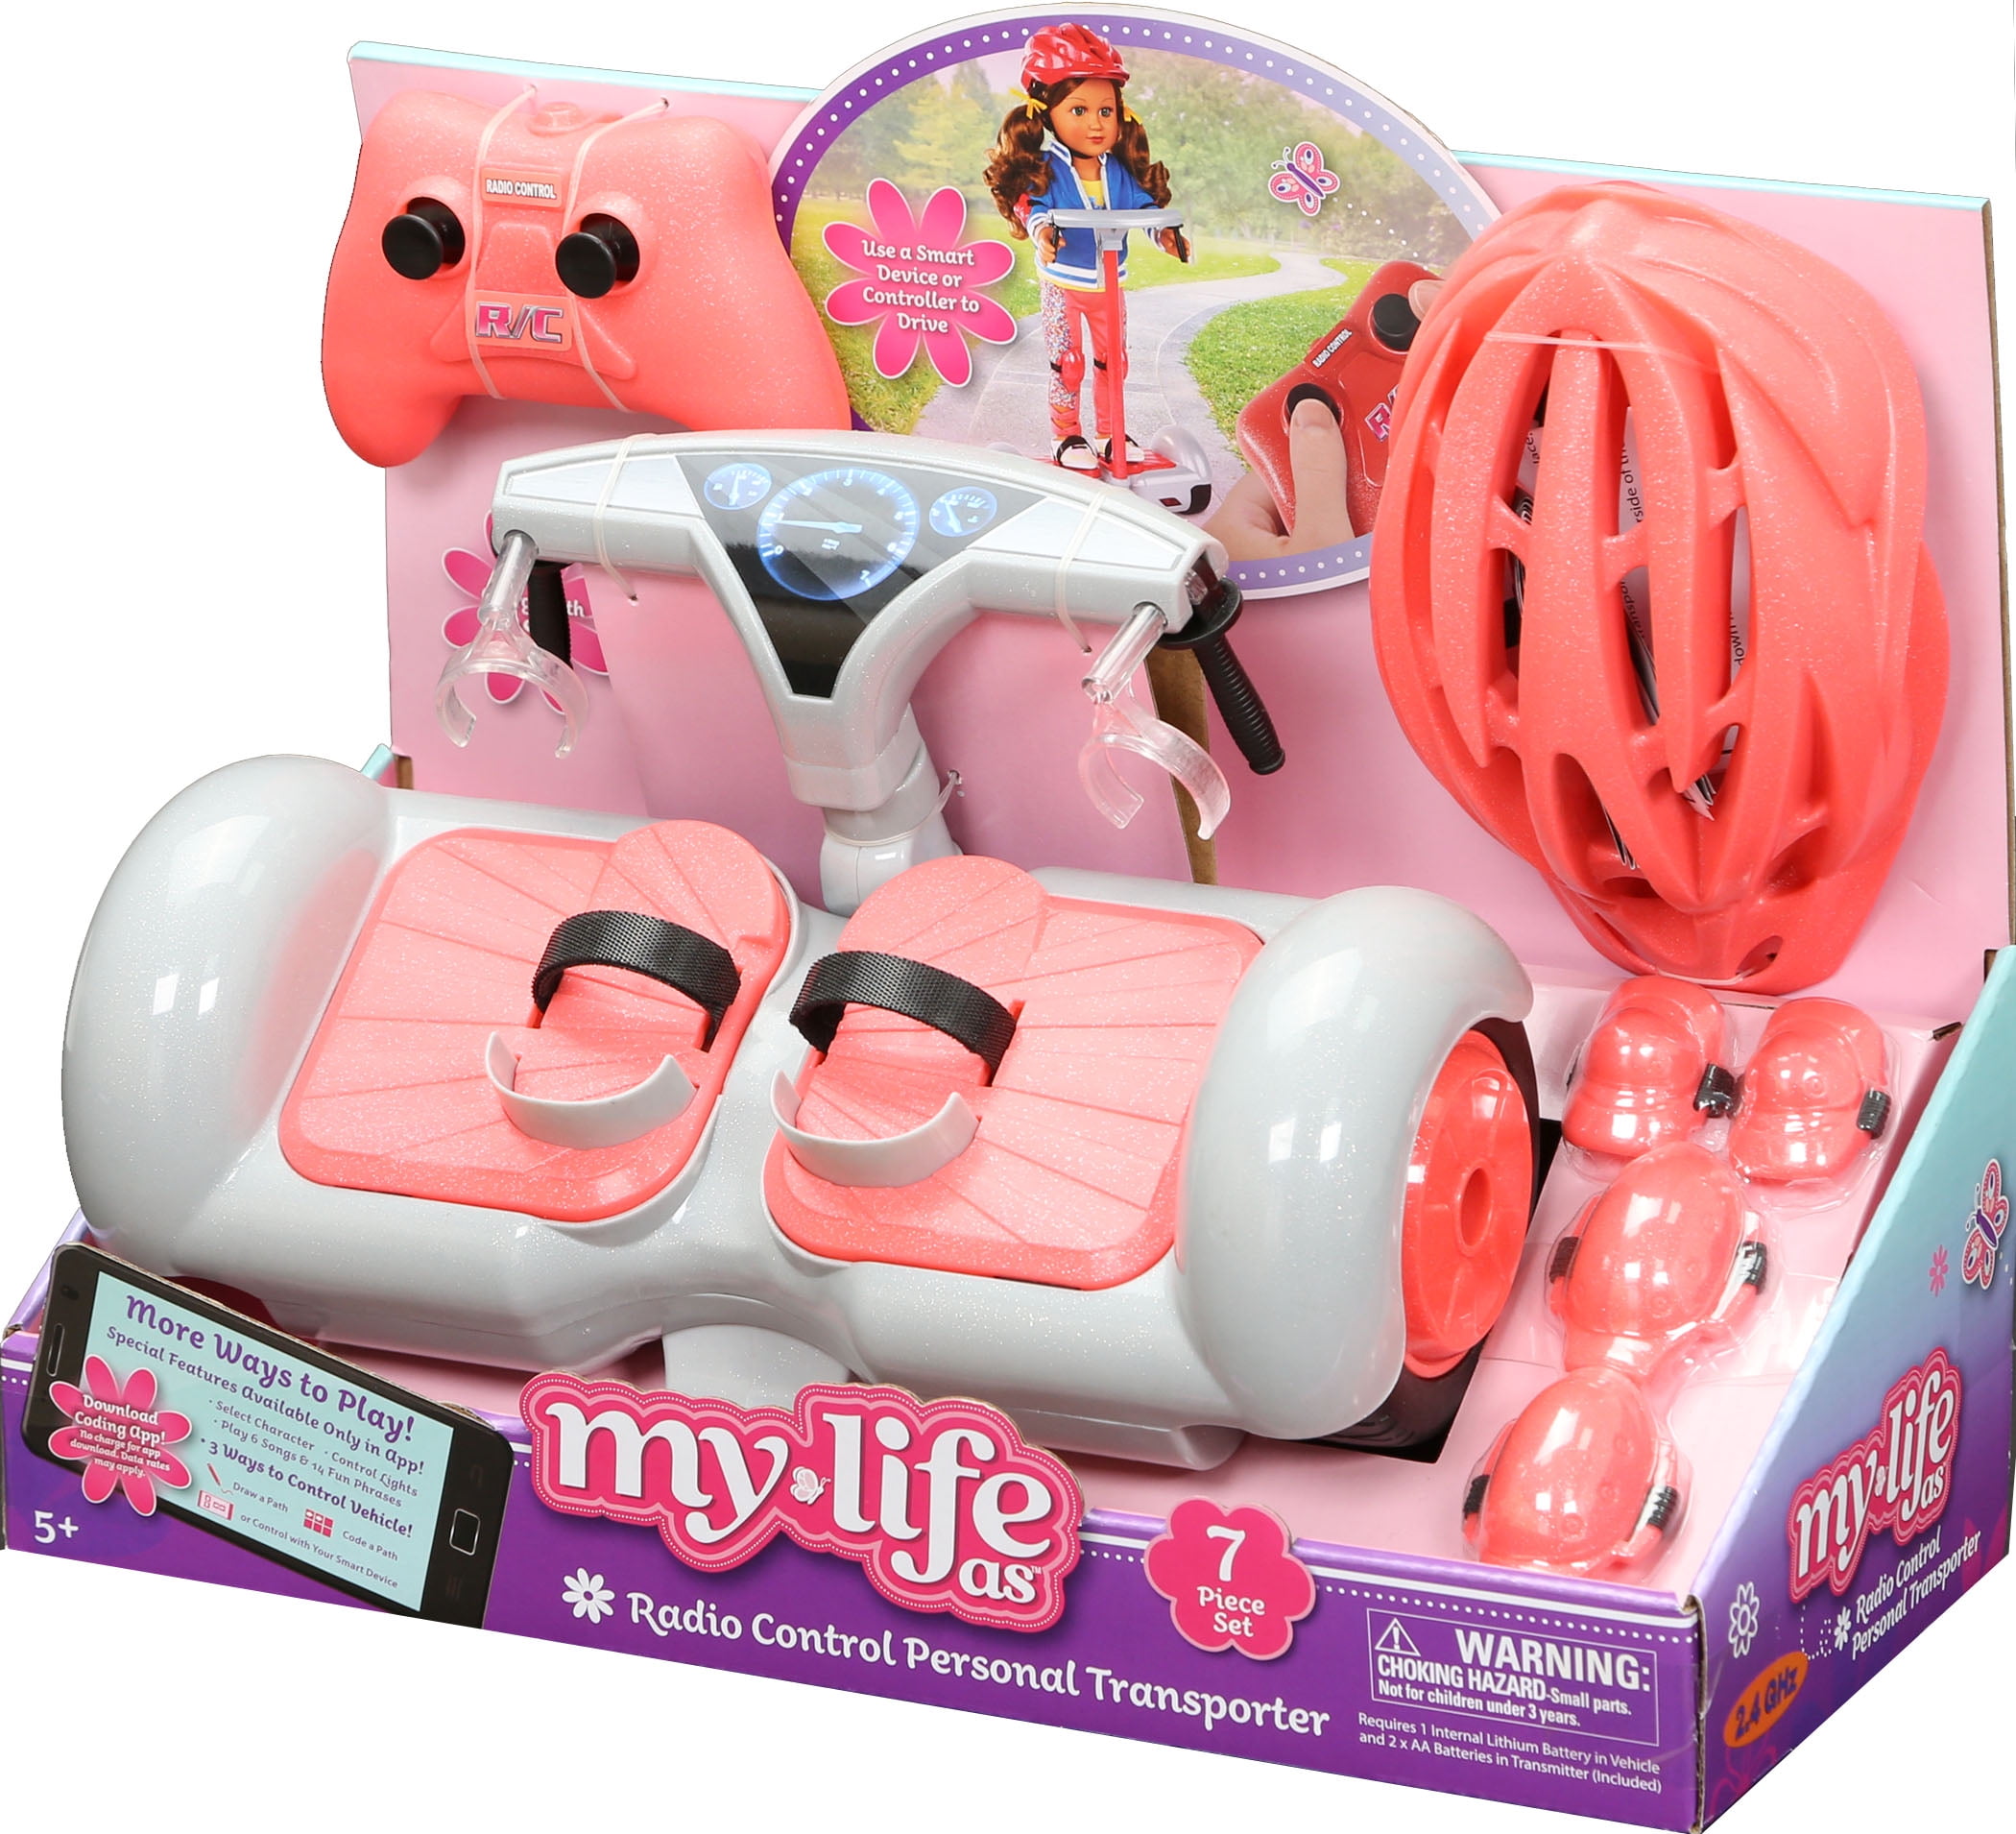 Life toys. My Life as игрушки. My Life as игрушкп. My Life as набор. My Life us игрушки.